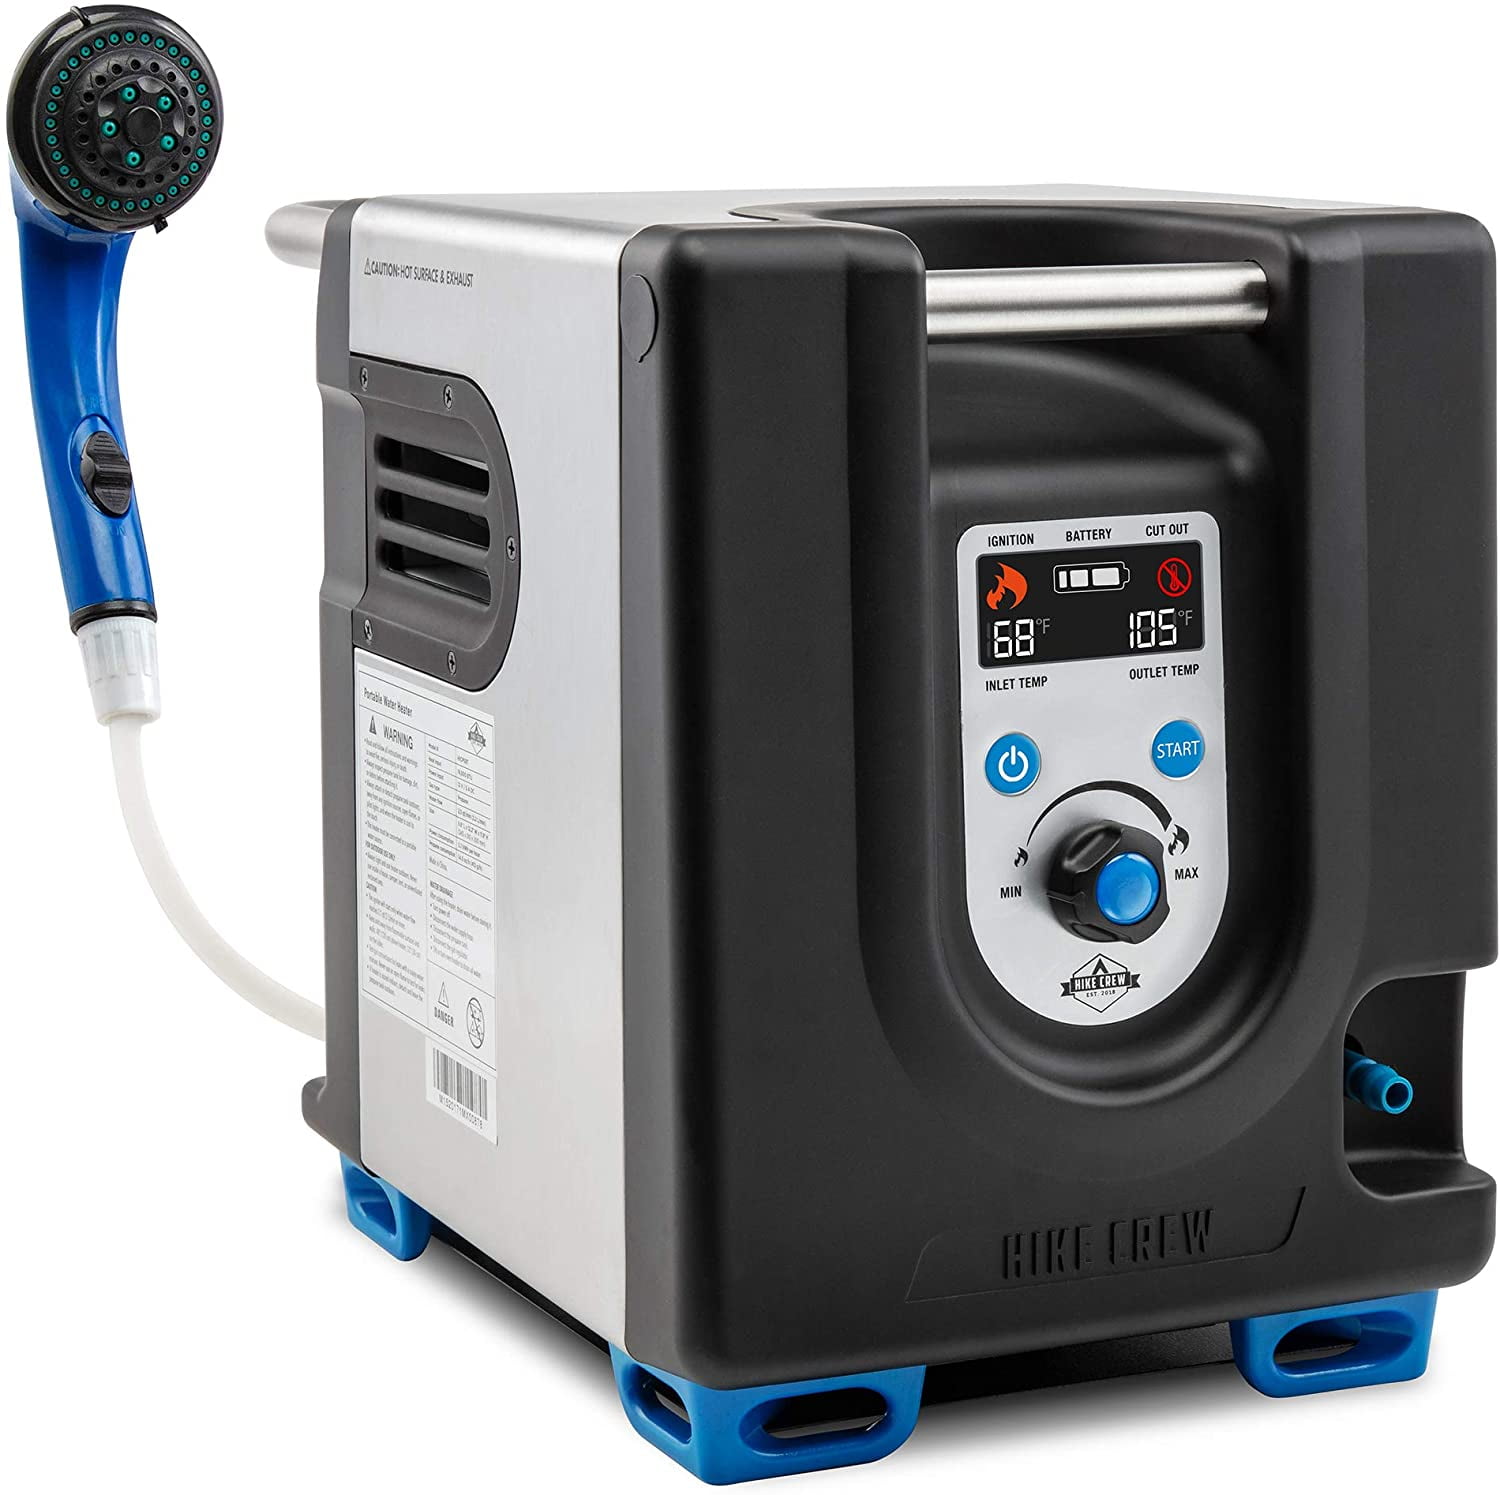 Portable Propane Water Heater & Shower Pump W/Built-in Battery, 2.3 Qt/Min - Black - Walmart.com